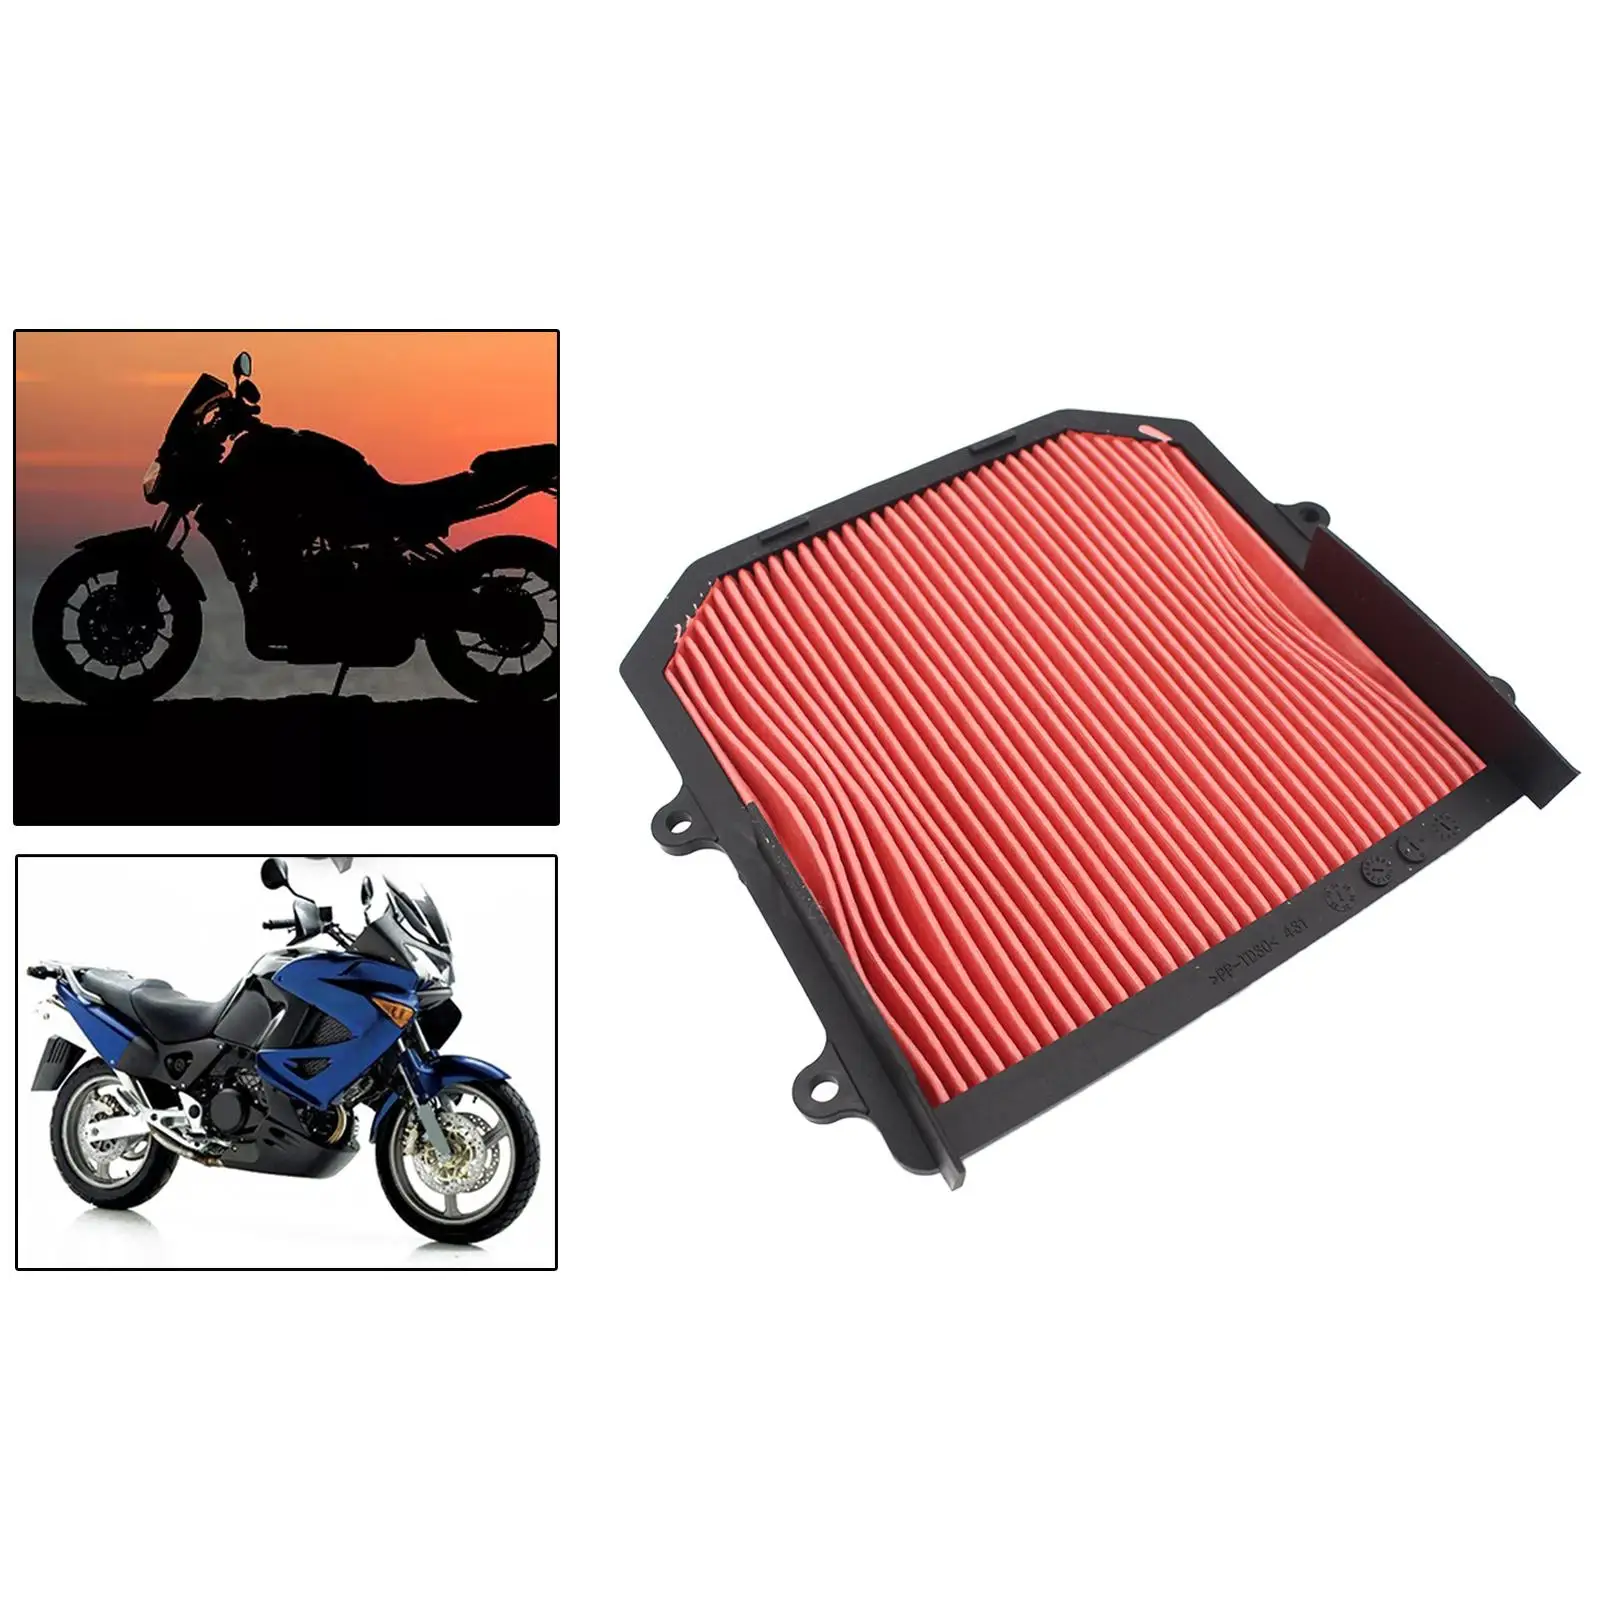 Motorcycle Air Filter Cleaner Fit for XL1000V 03-11 17210-Mbt-D20